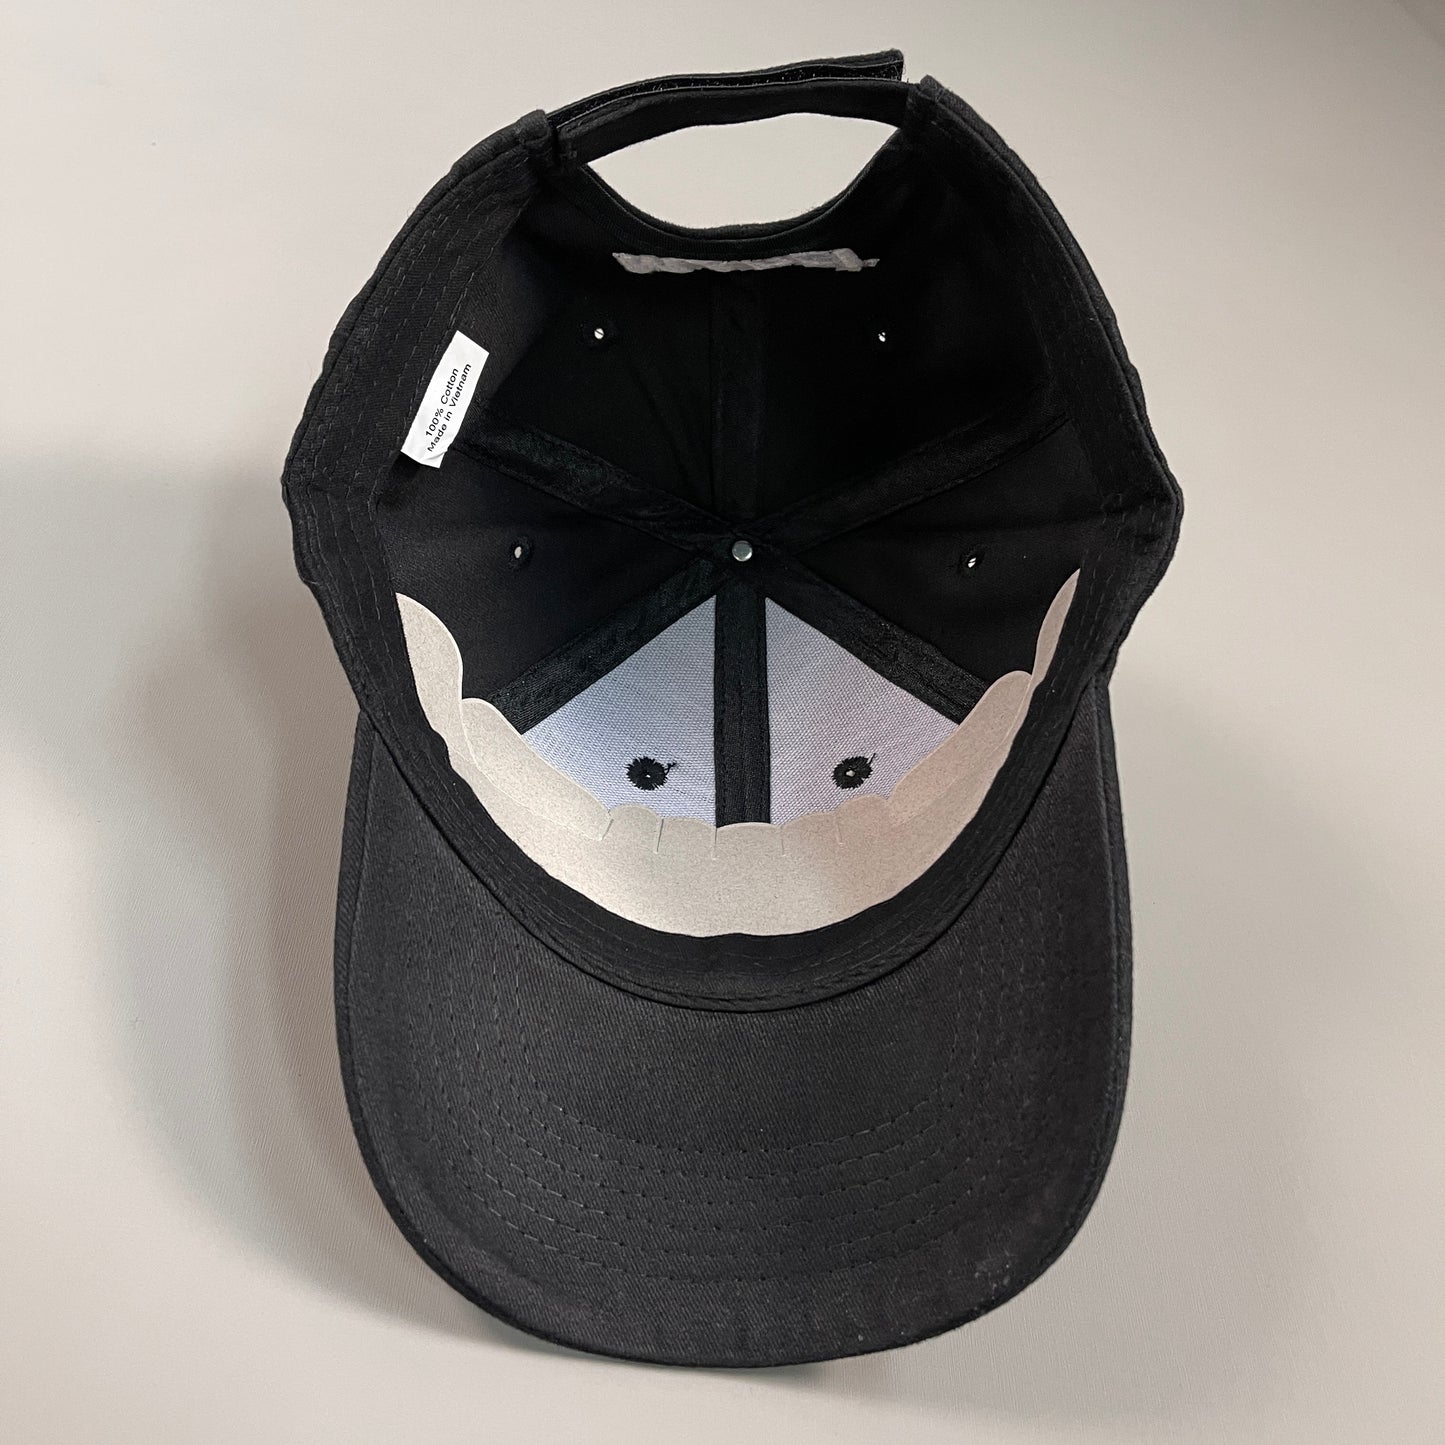 FLOOR & DECOR PRO PREMIER Baseball Cap Embroidered adjustable Hat Sz OS Black New